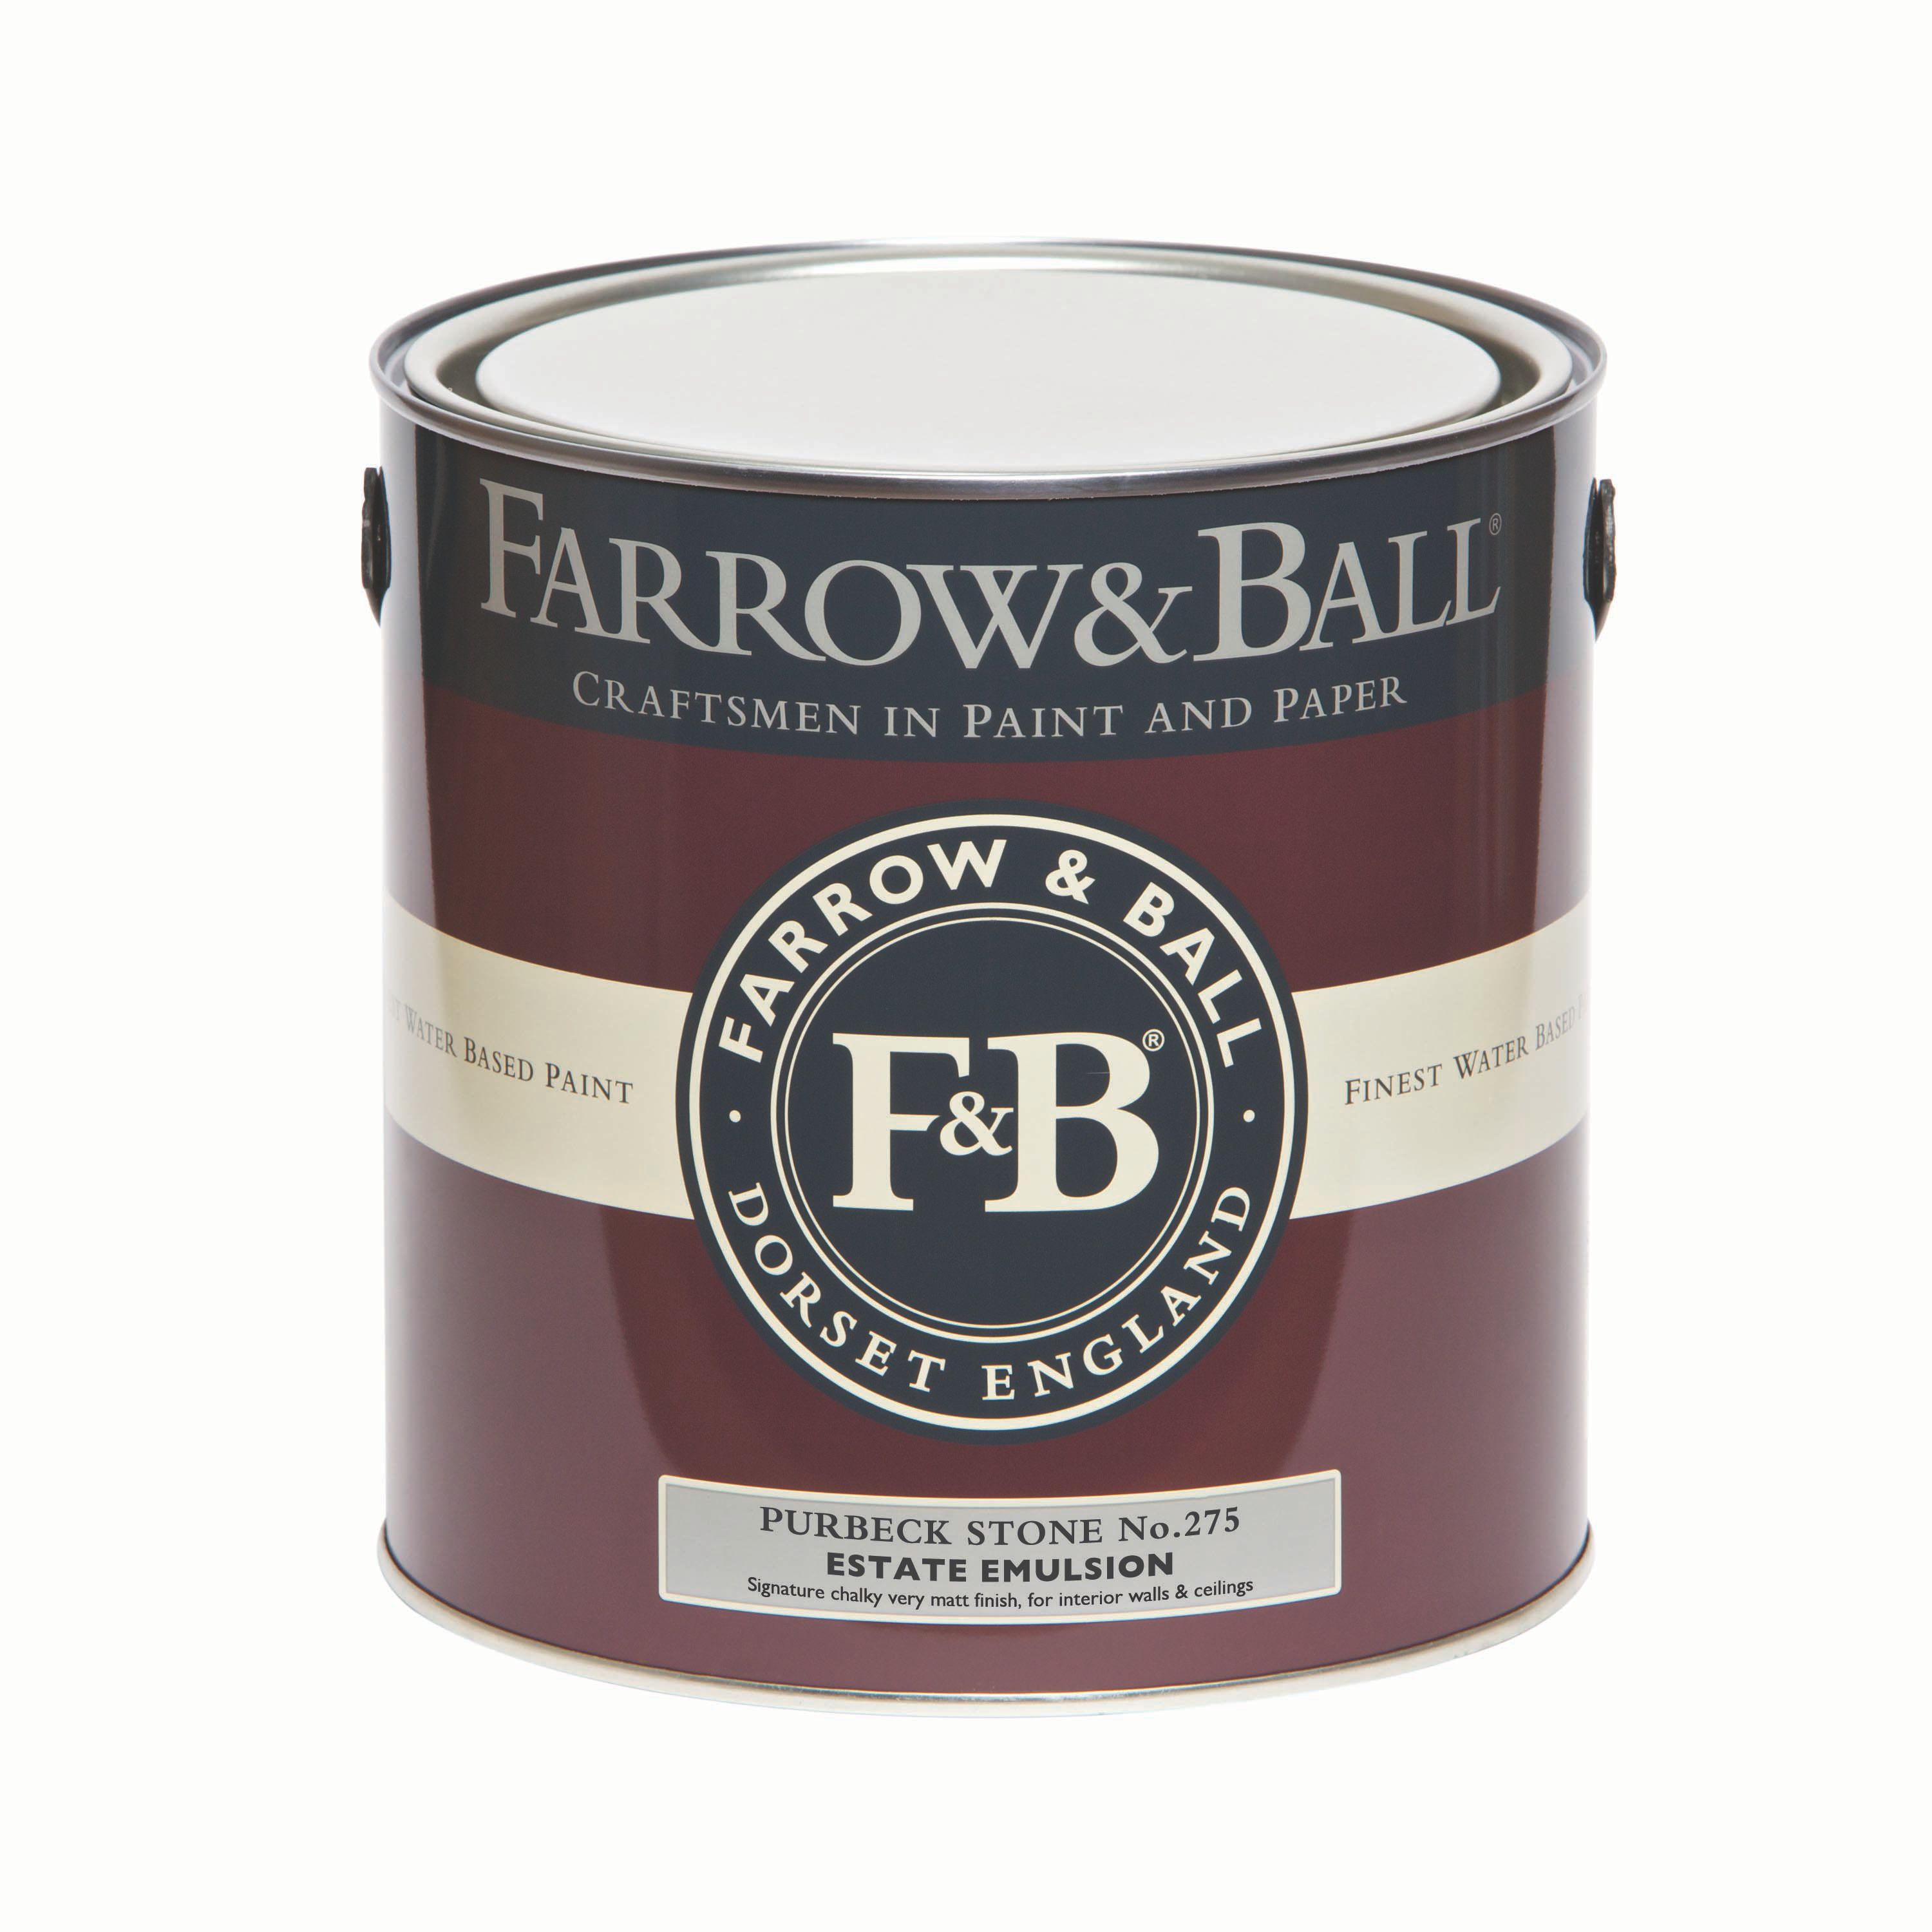 Farrow & Ball Estate Purbeck stone Matt Emulsion paint, 2.5L